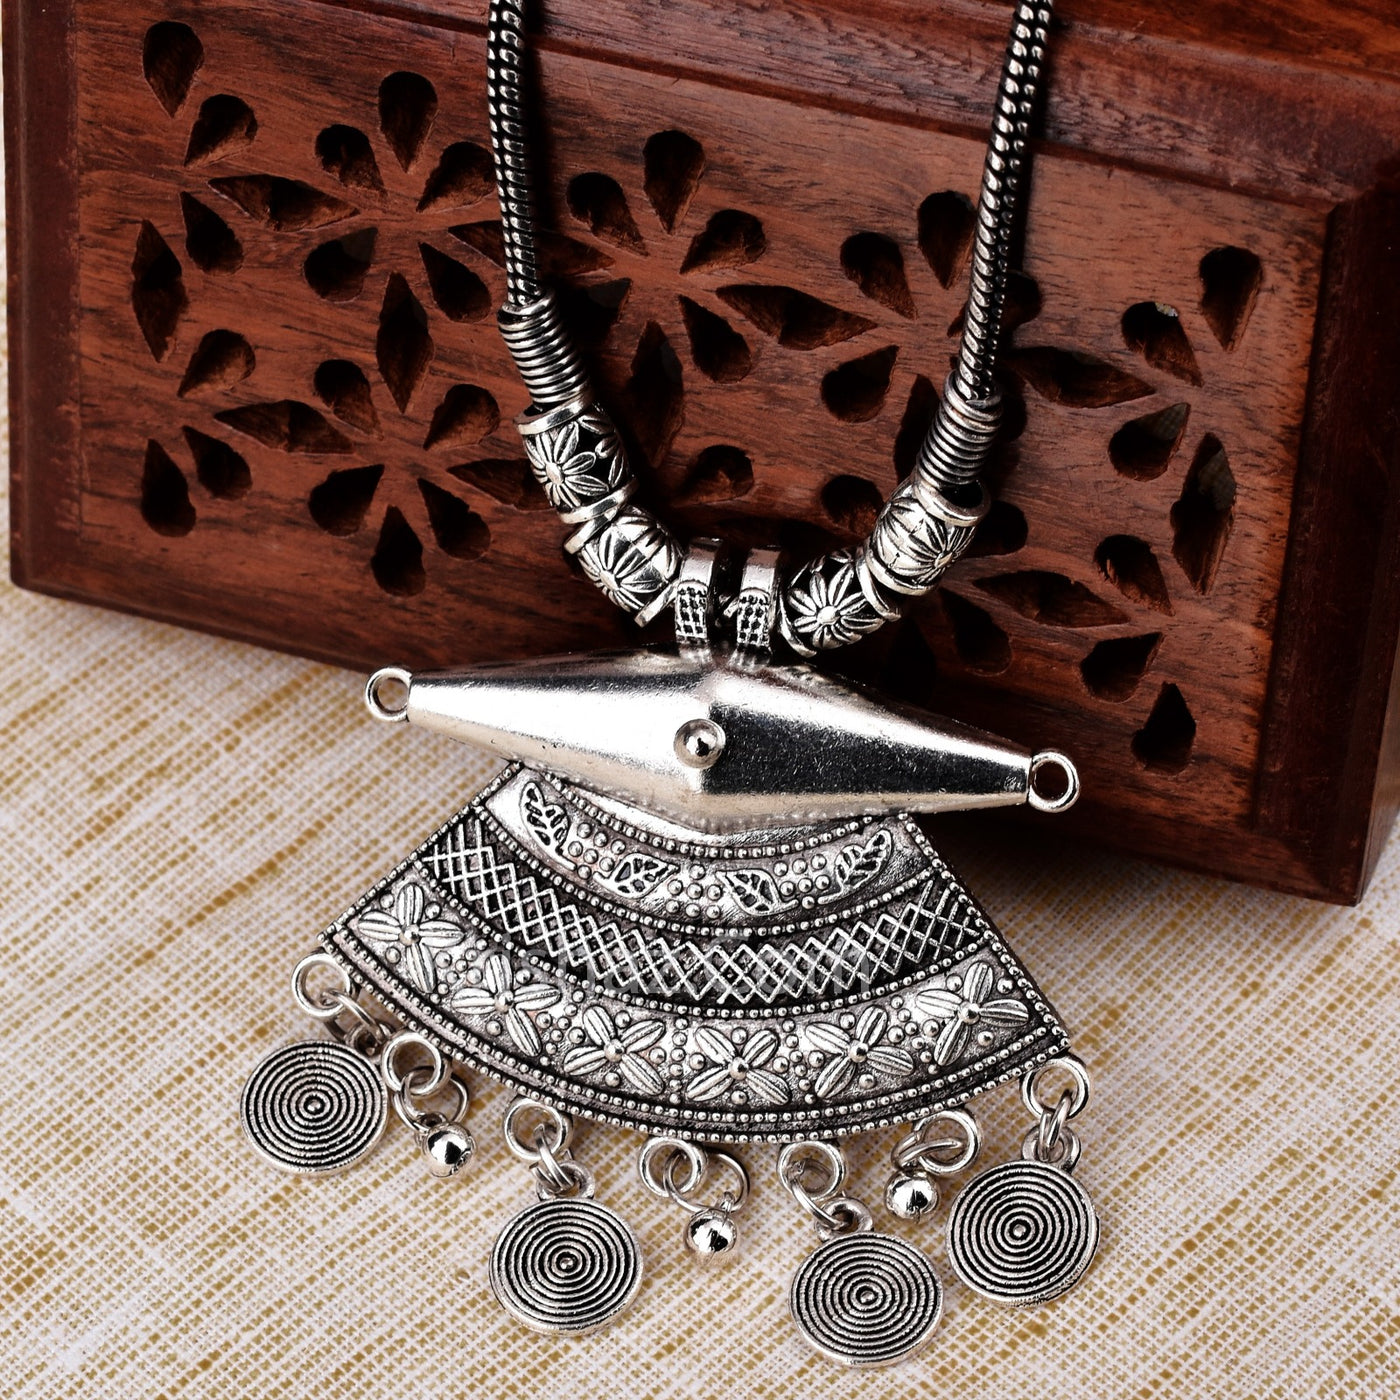 Designer Oxidized Silver Kolhapuri Long Pendant Necklace